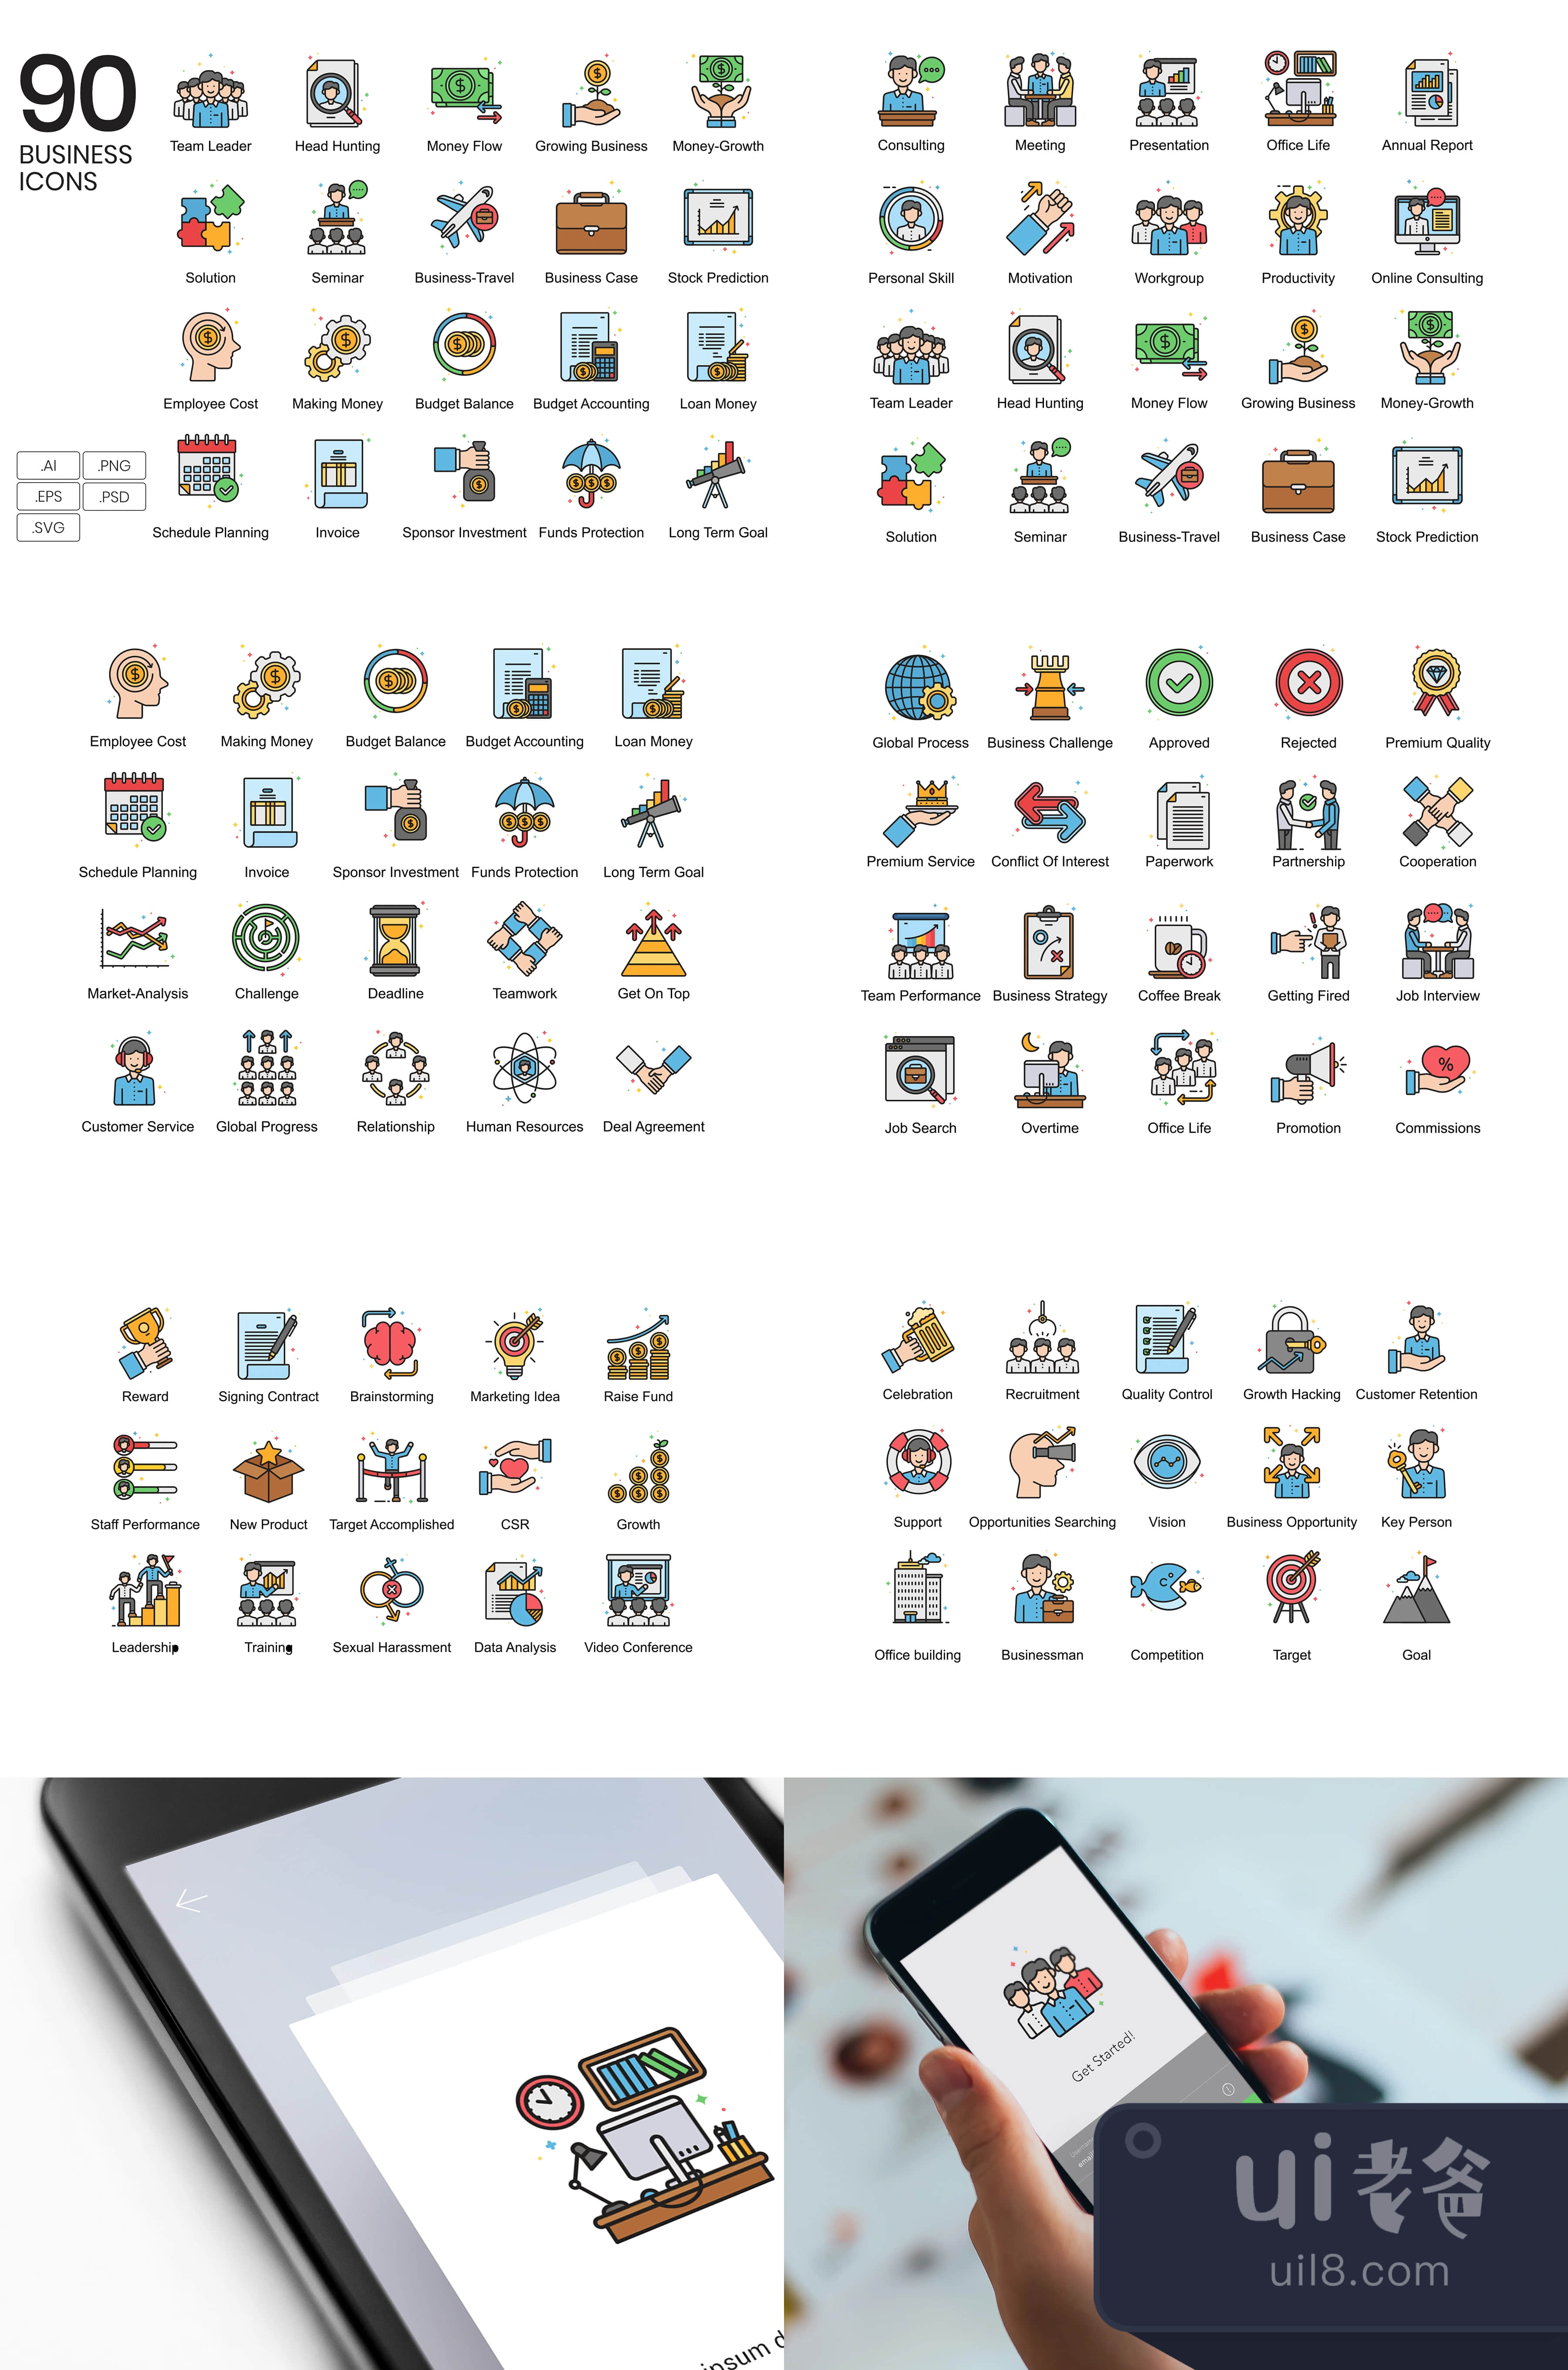 90个商业图标 - 生动系列 (90 Business Icons - Vivid Series)插图